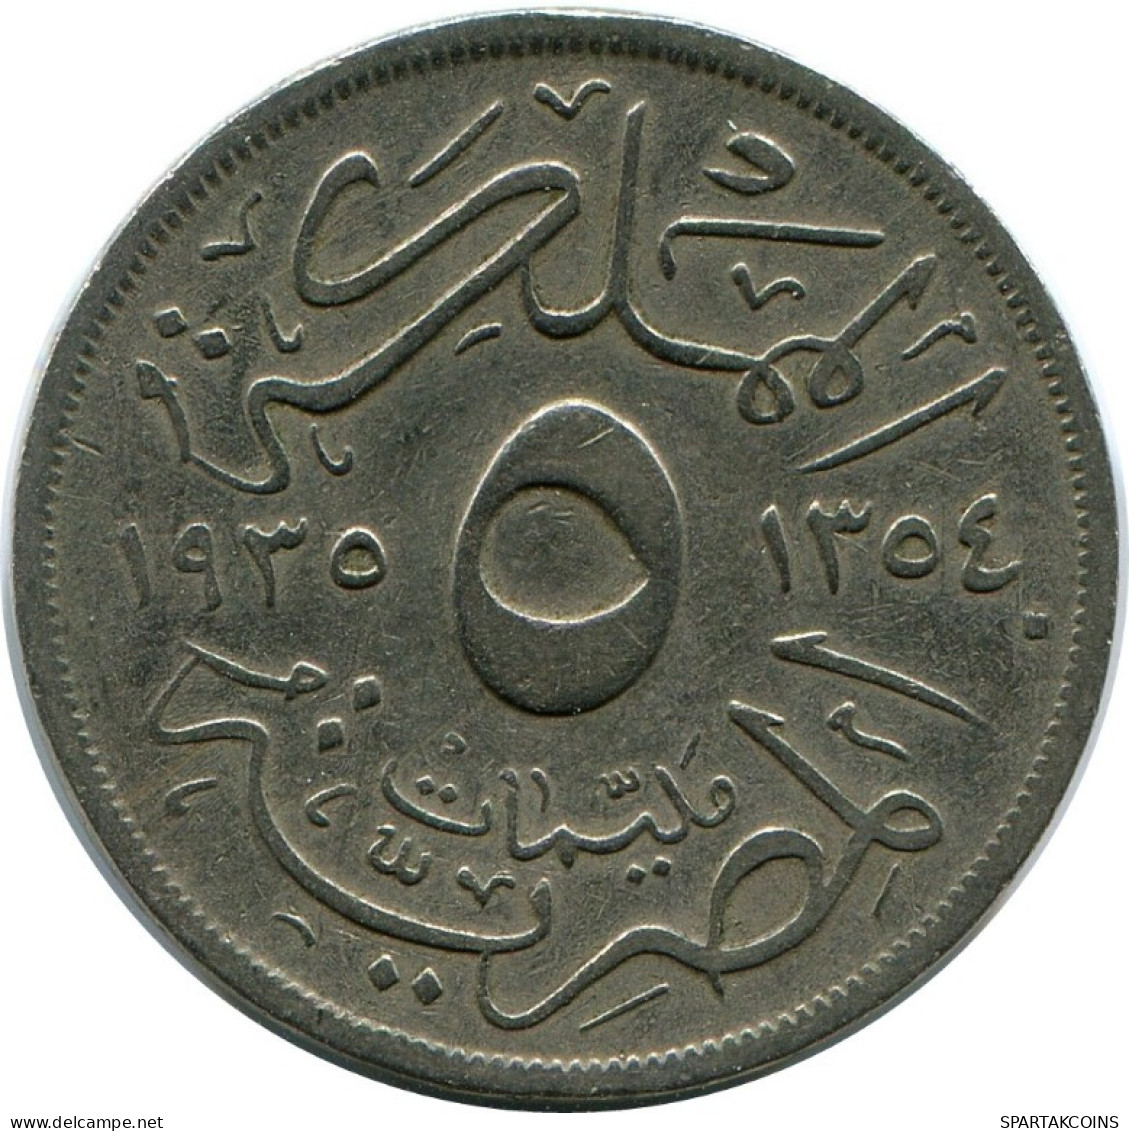 5 MILLIEMES 1935 EGIPTO EGYPT Islámico Moneda #AH666.3.E.A - Aegypten